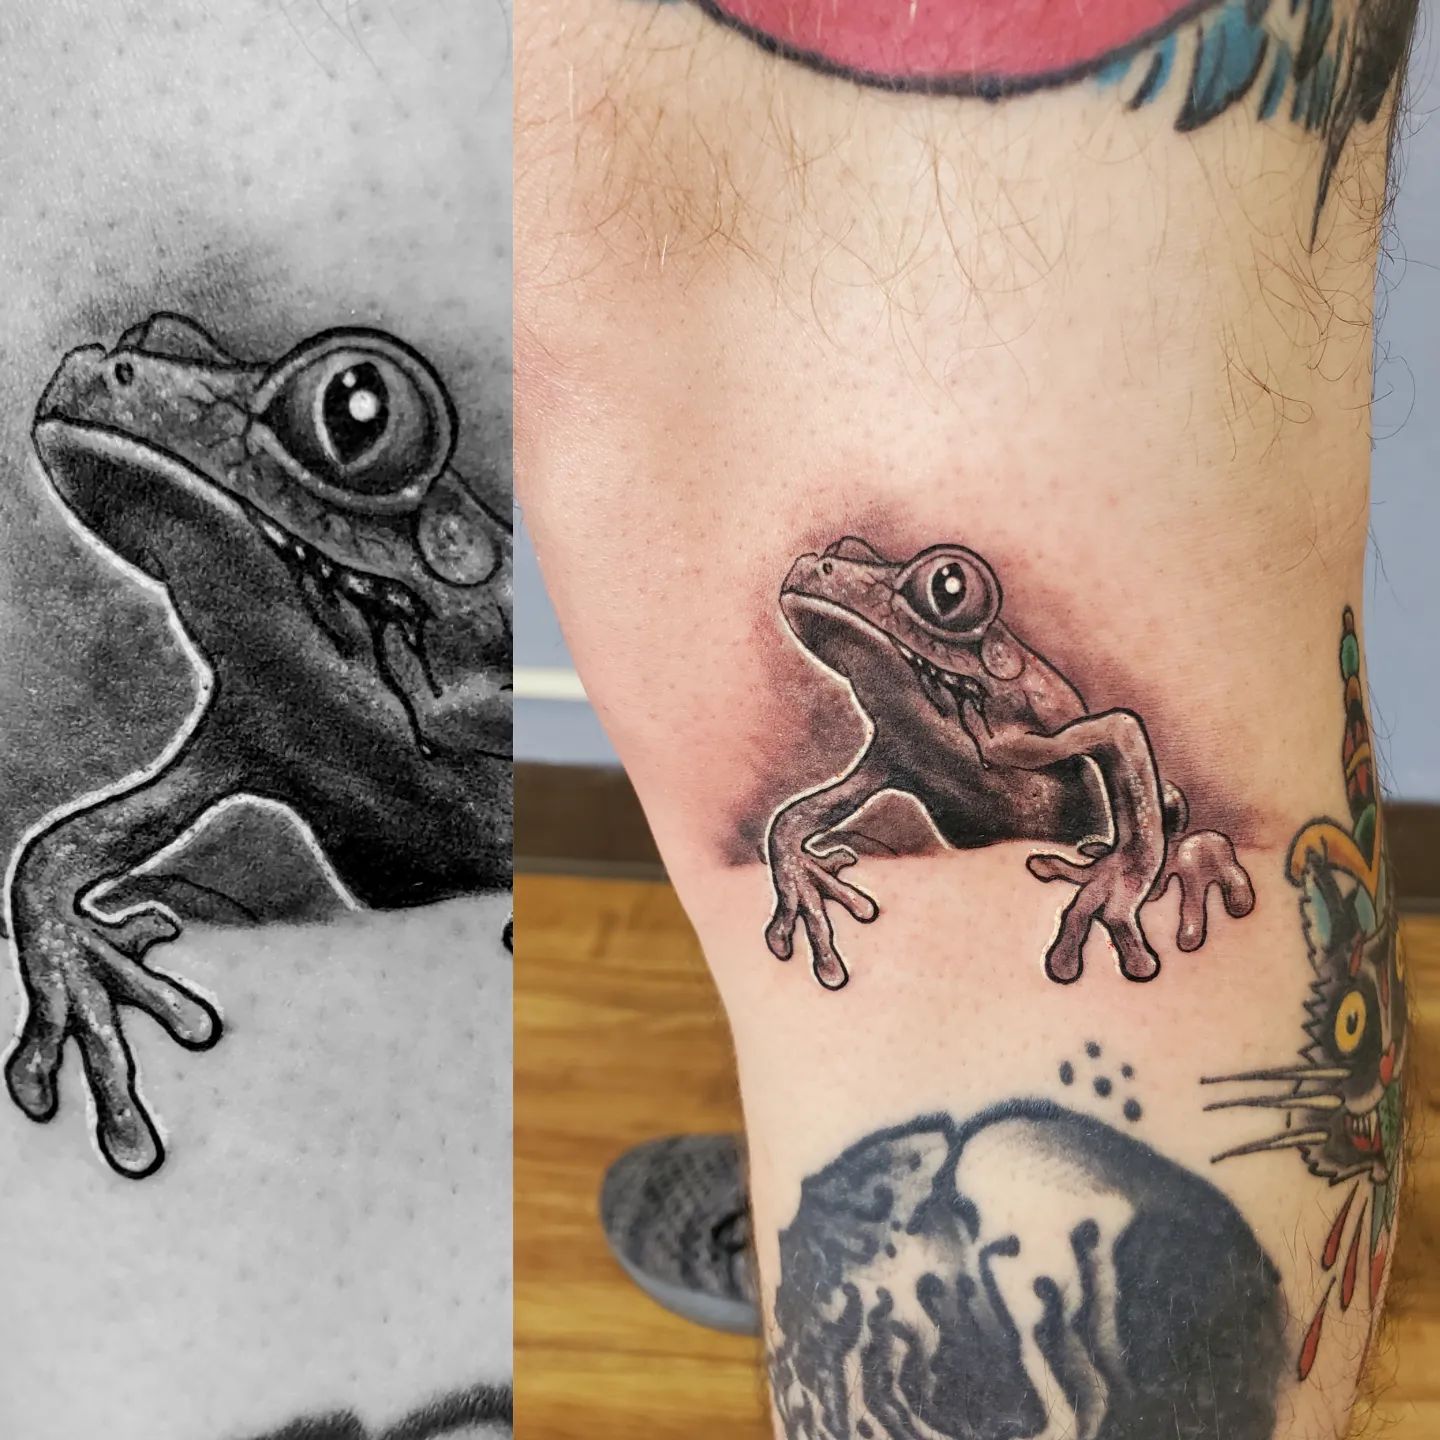 Wicked little frog dude by Justin

@Jukzta #Jukzta #tattoo #blackandgrey #darkart #blackandgreytattoo #tattoosofinstagram #tattoosleeve #tattooartist #wicked #frog #sic #realismtattoo #realish #NightfallGallery